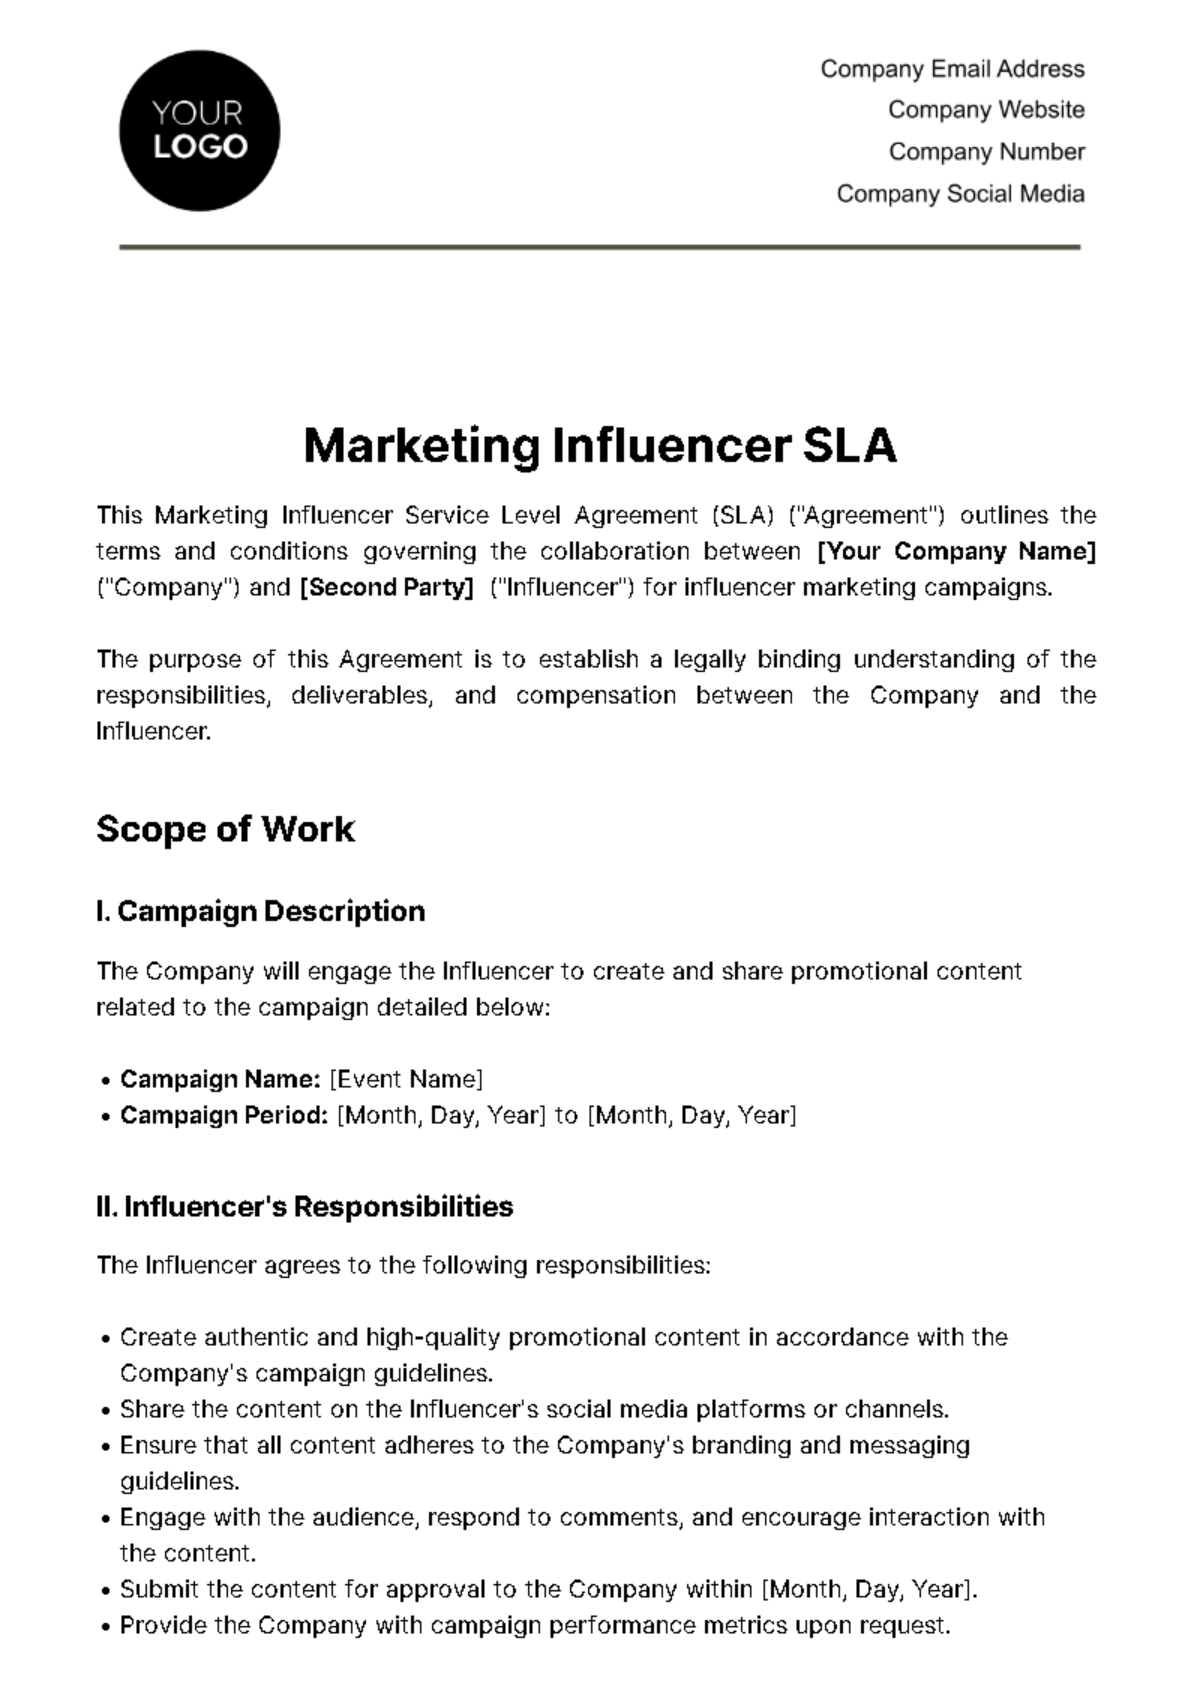 Marketing Influencer SLA Template